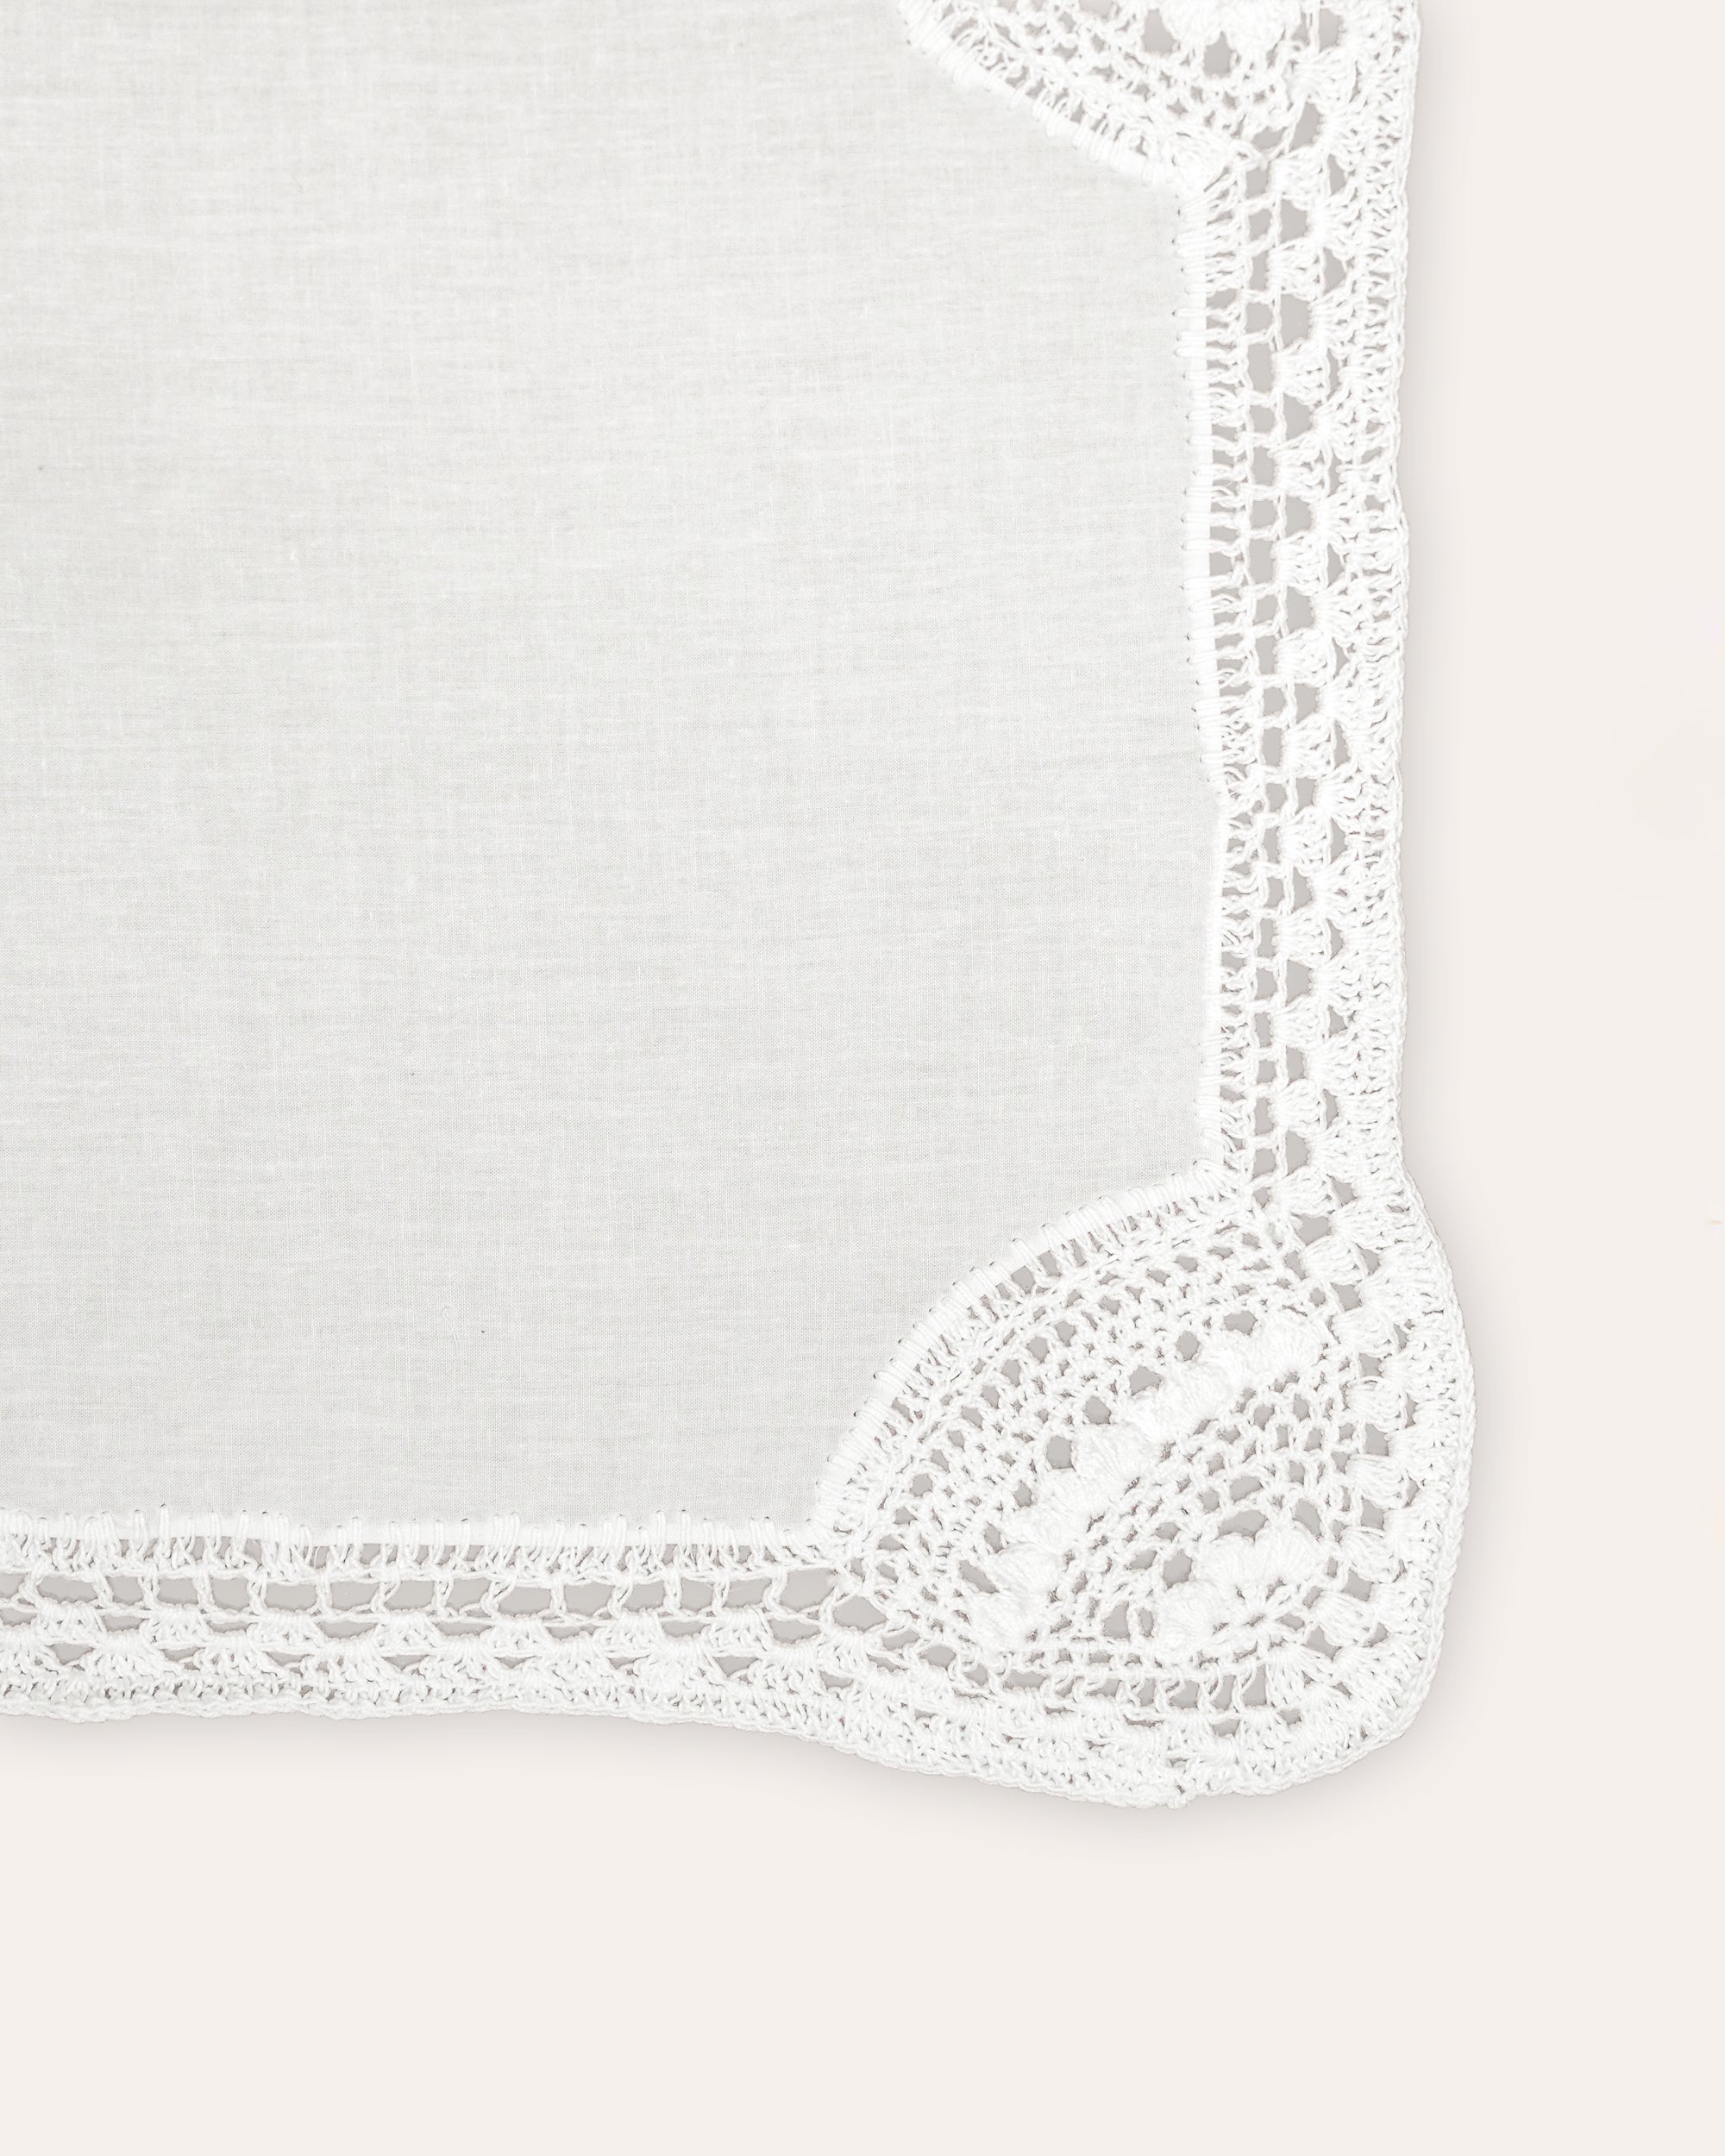 Cotton Crochet Bedspread